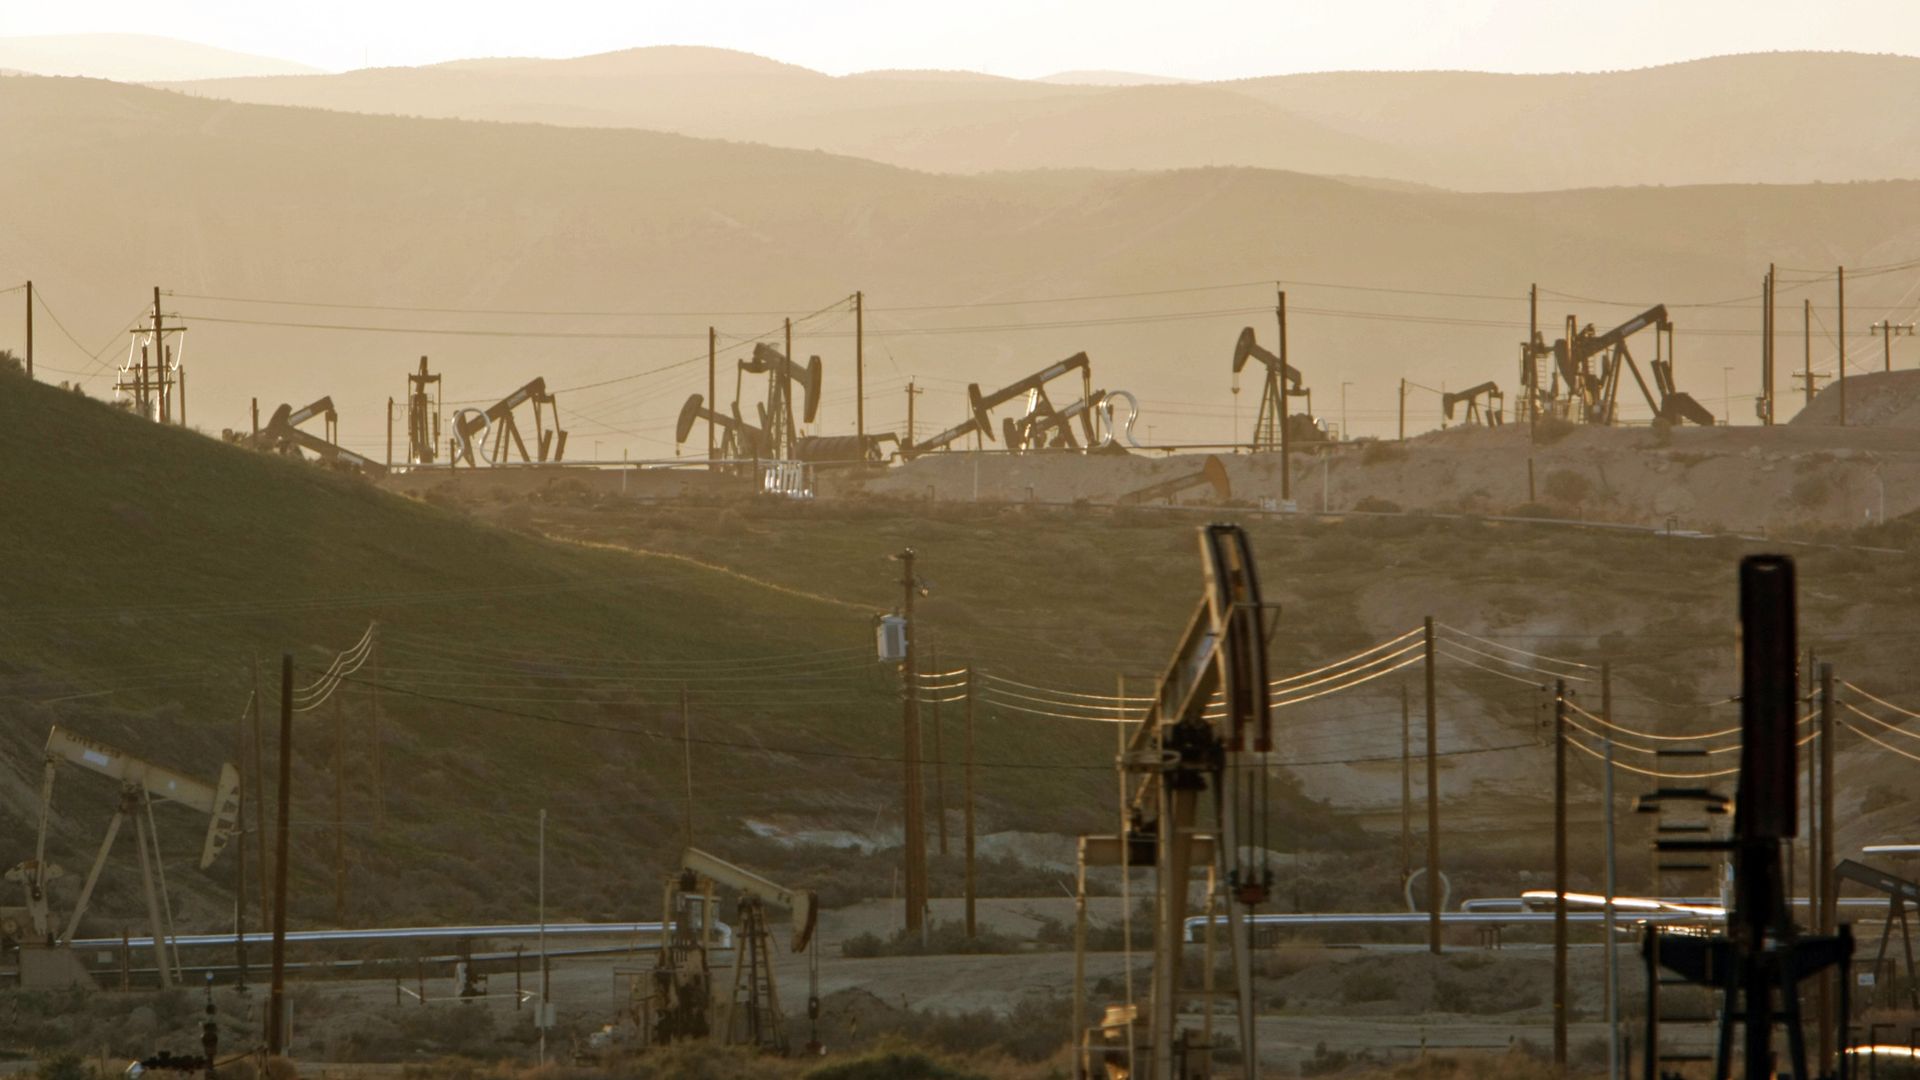 Oil rig pump jacks work the oil fields near the town of Maricopa